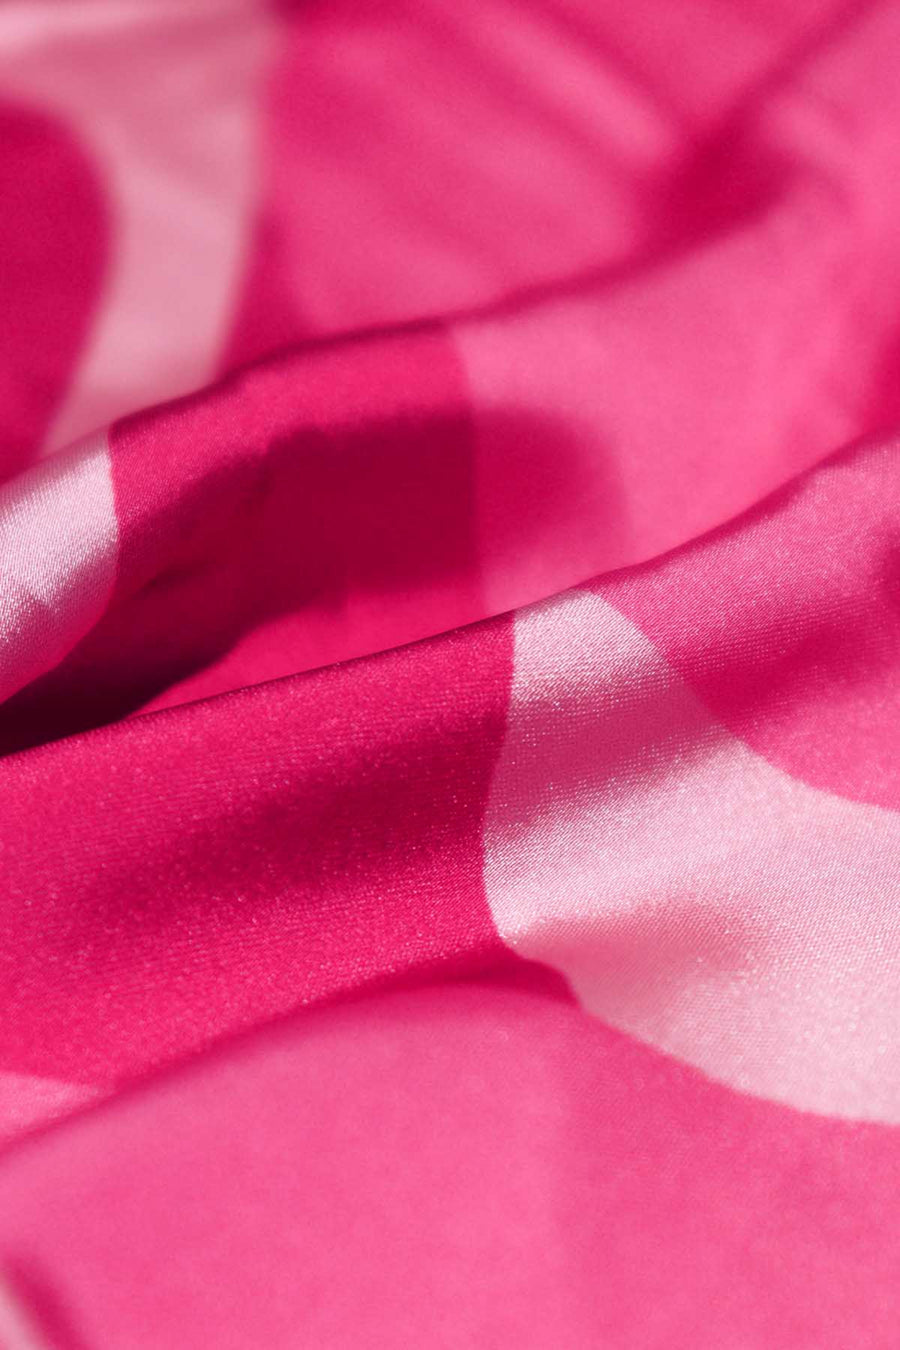 Scarf Silly | Pink Swirl Print